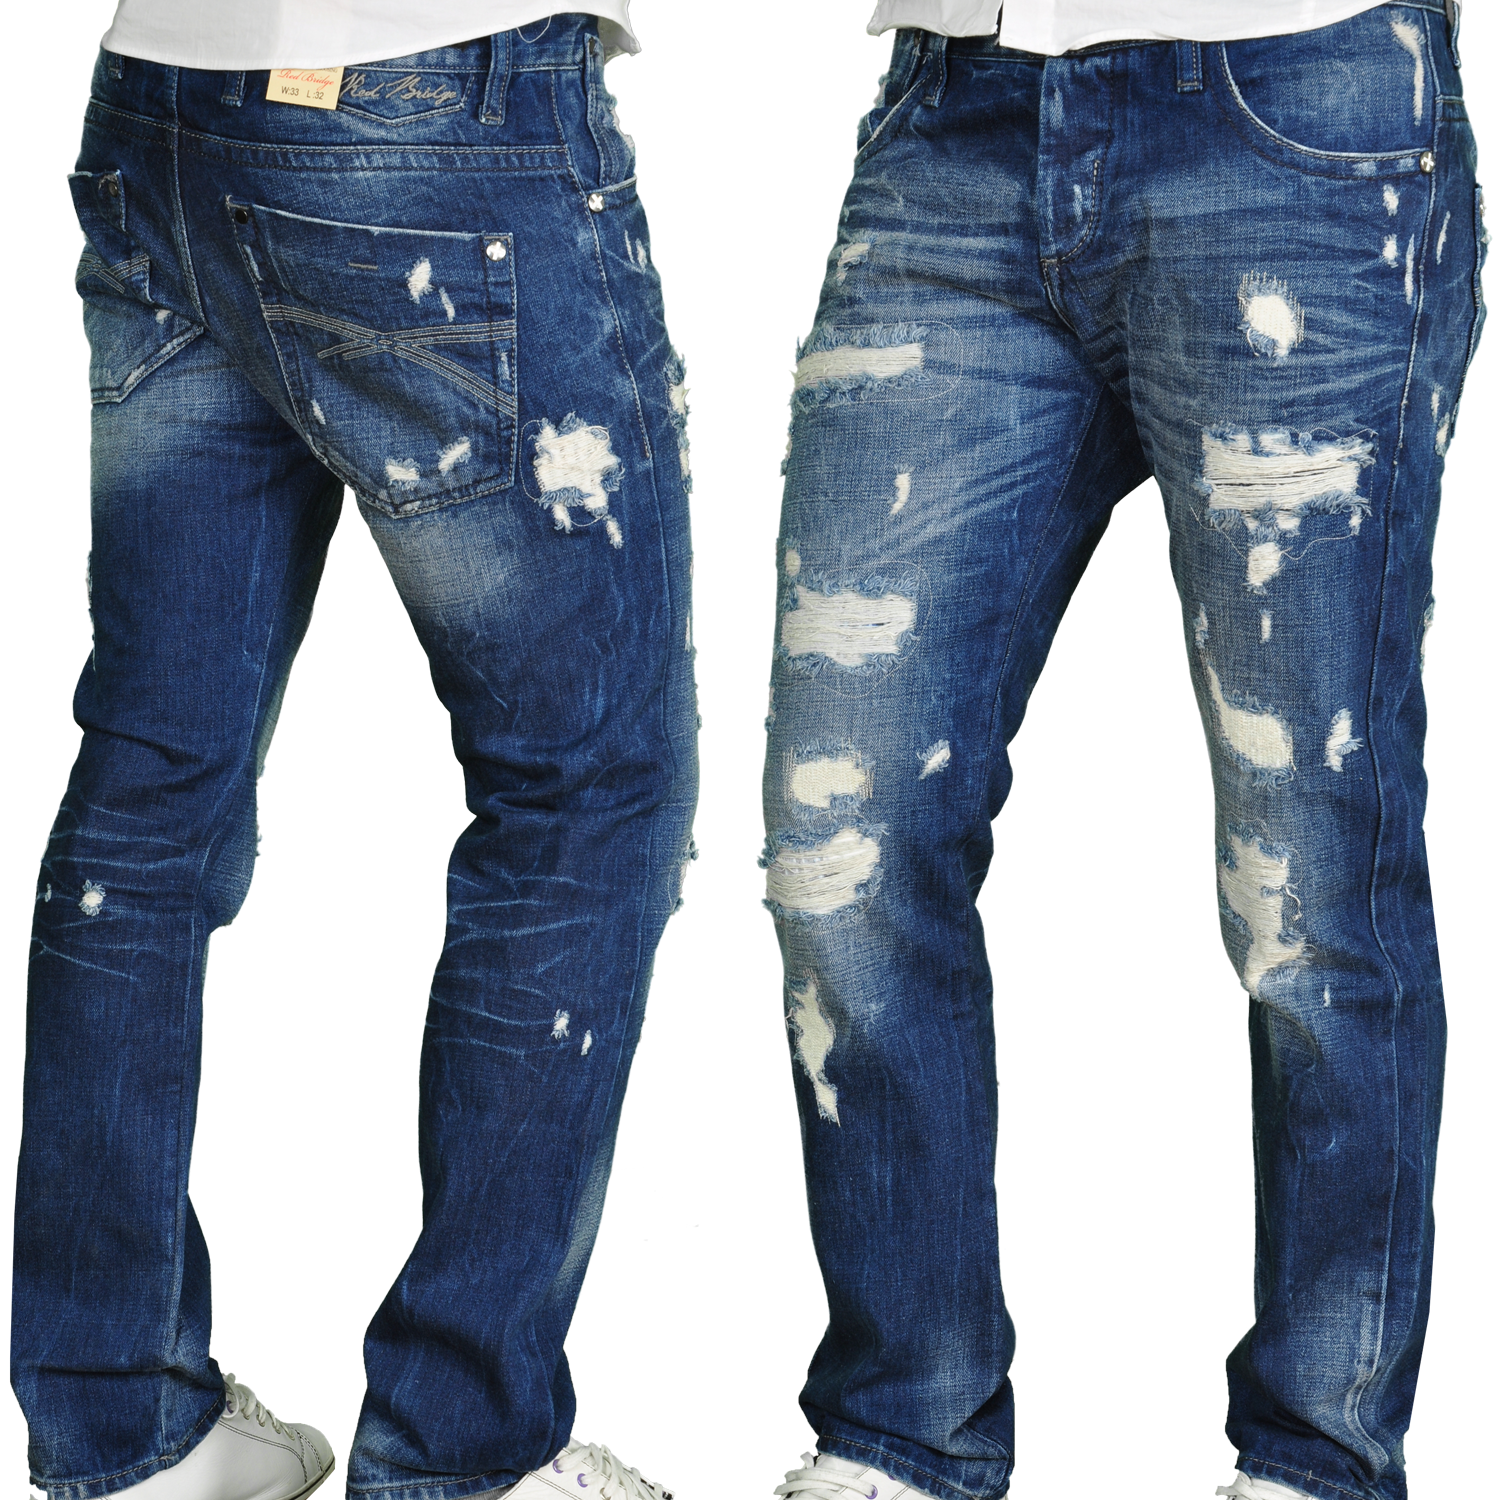 Men's Jeans PNG Image - PurePNG | Free transparent CC0 PNG Image Library